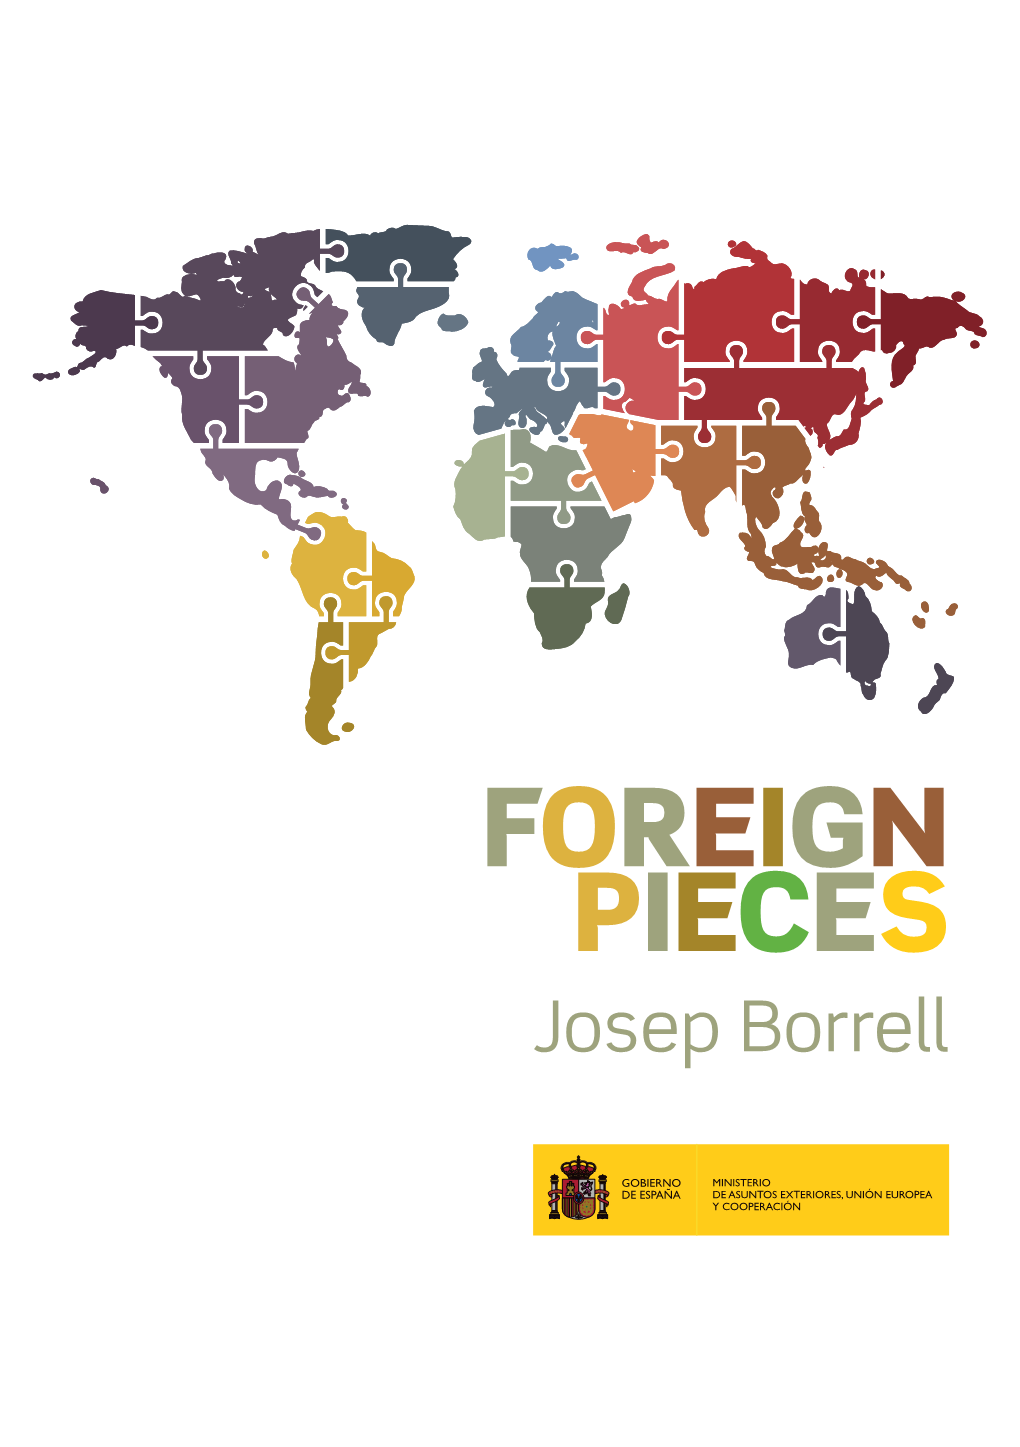 FOREIGN PIECES Josep Borrell